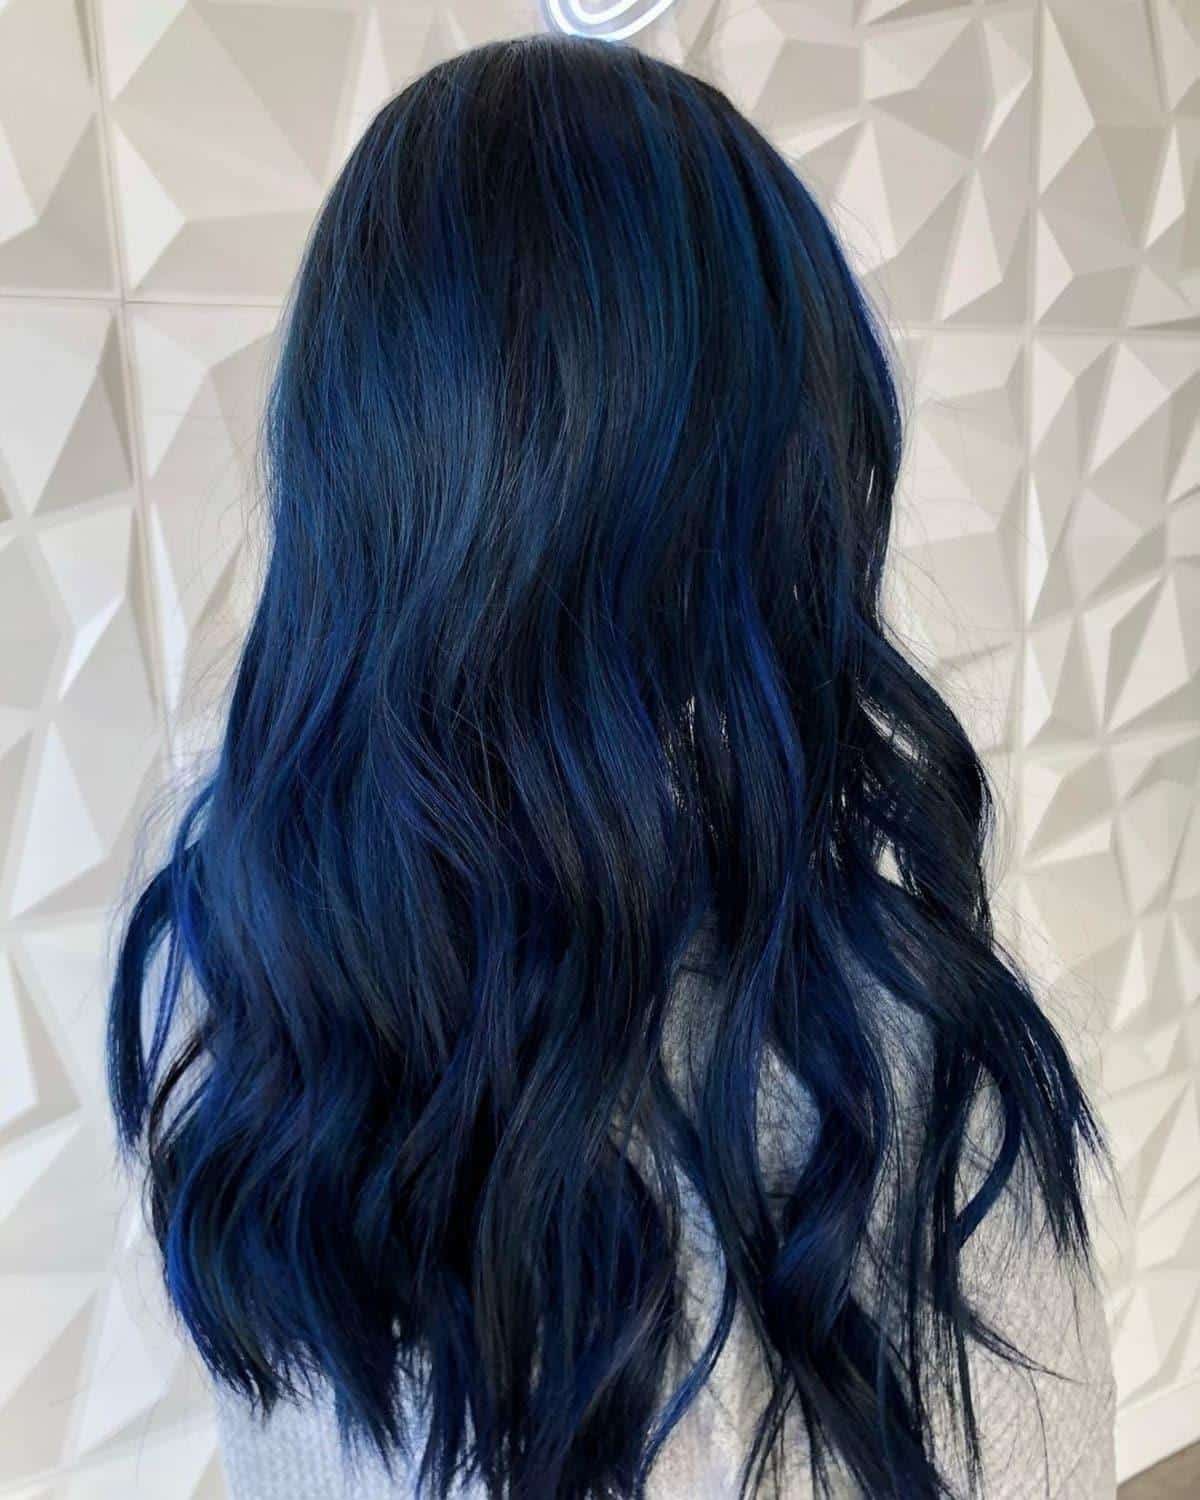 Bold Blue highlights on dark hair